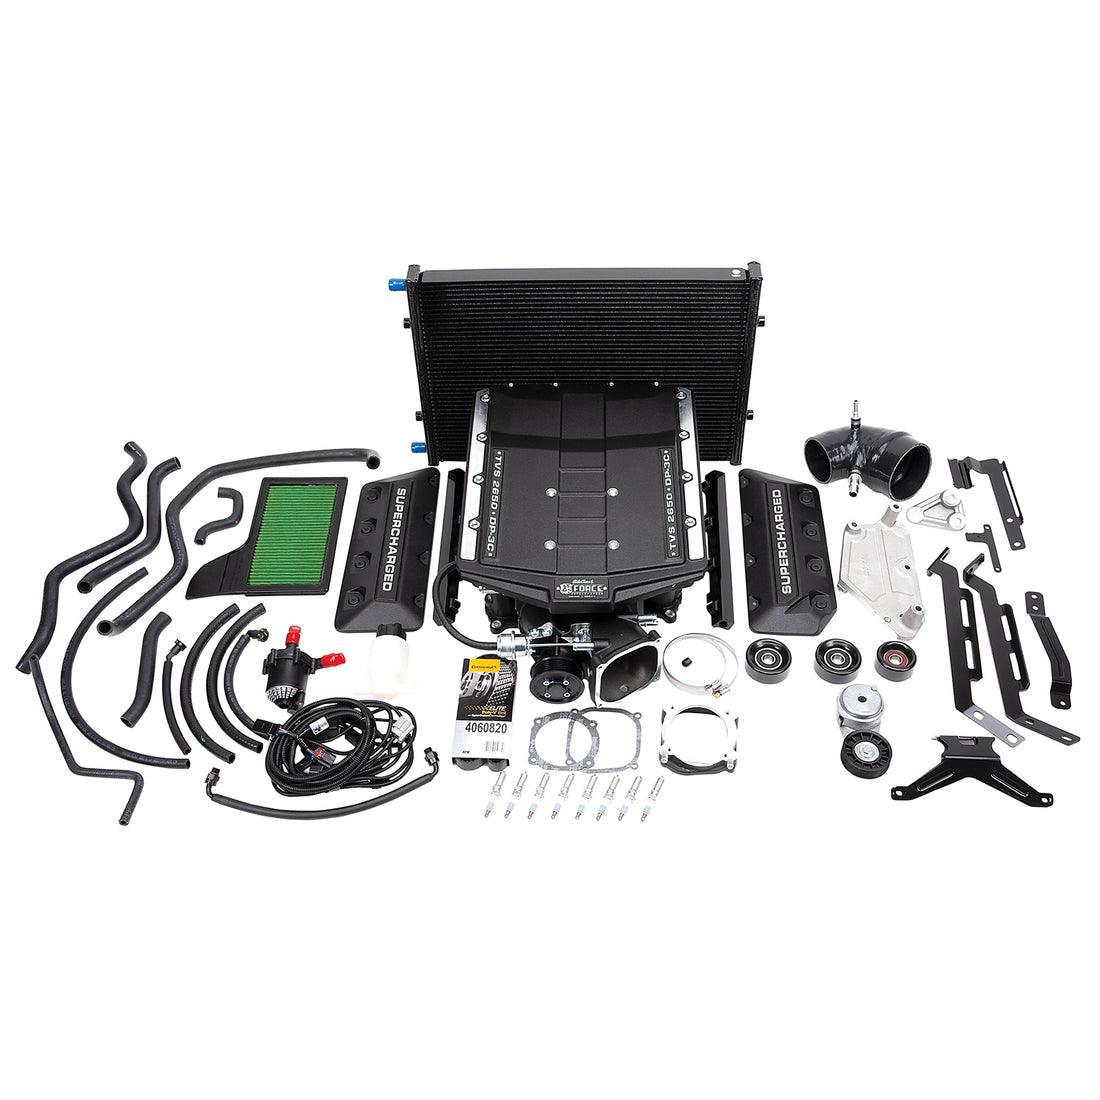 Edelbrock Stg 1 Supercharger Kit #158320 For 2018-21 Ford Mustang 5.0L W/O Tune Edelbrock